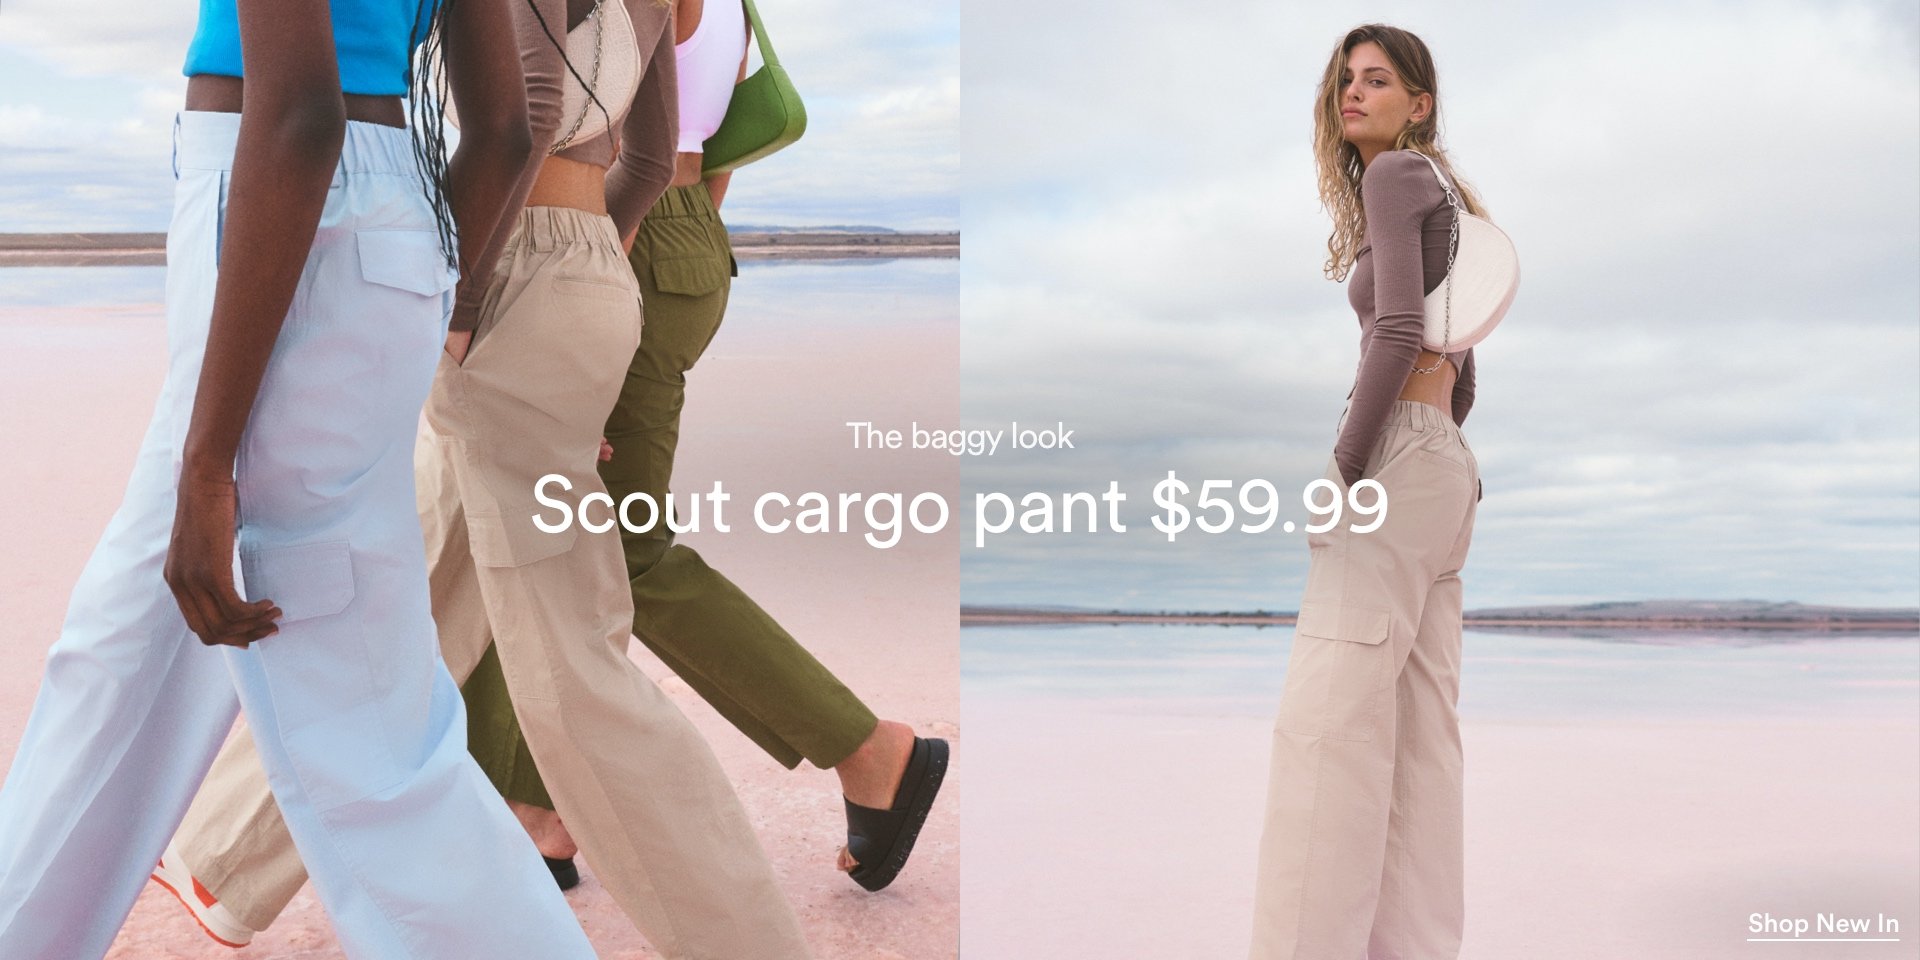 Scout cargo pant. Click to Shop Women's New Arrivals.